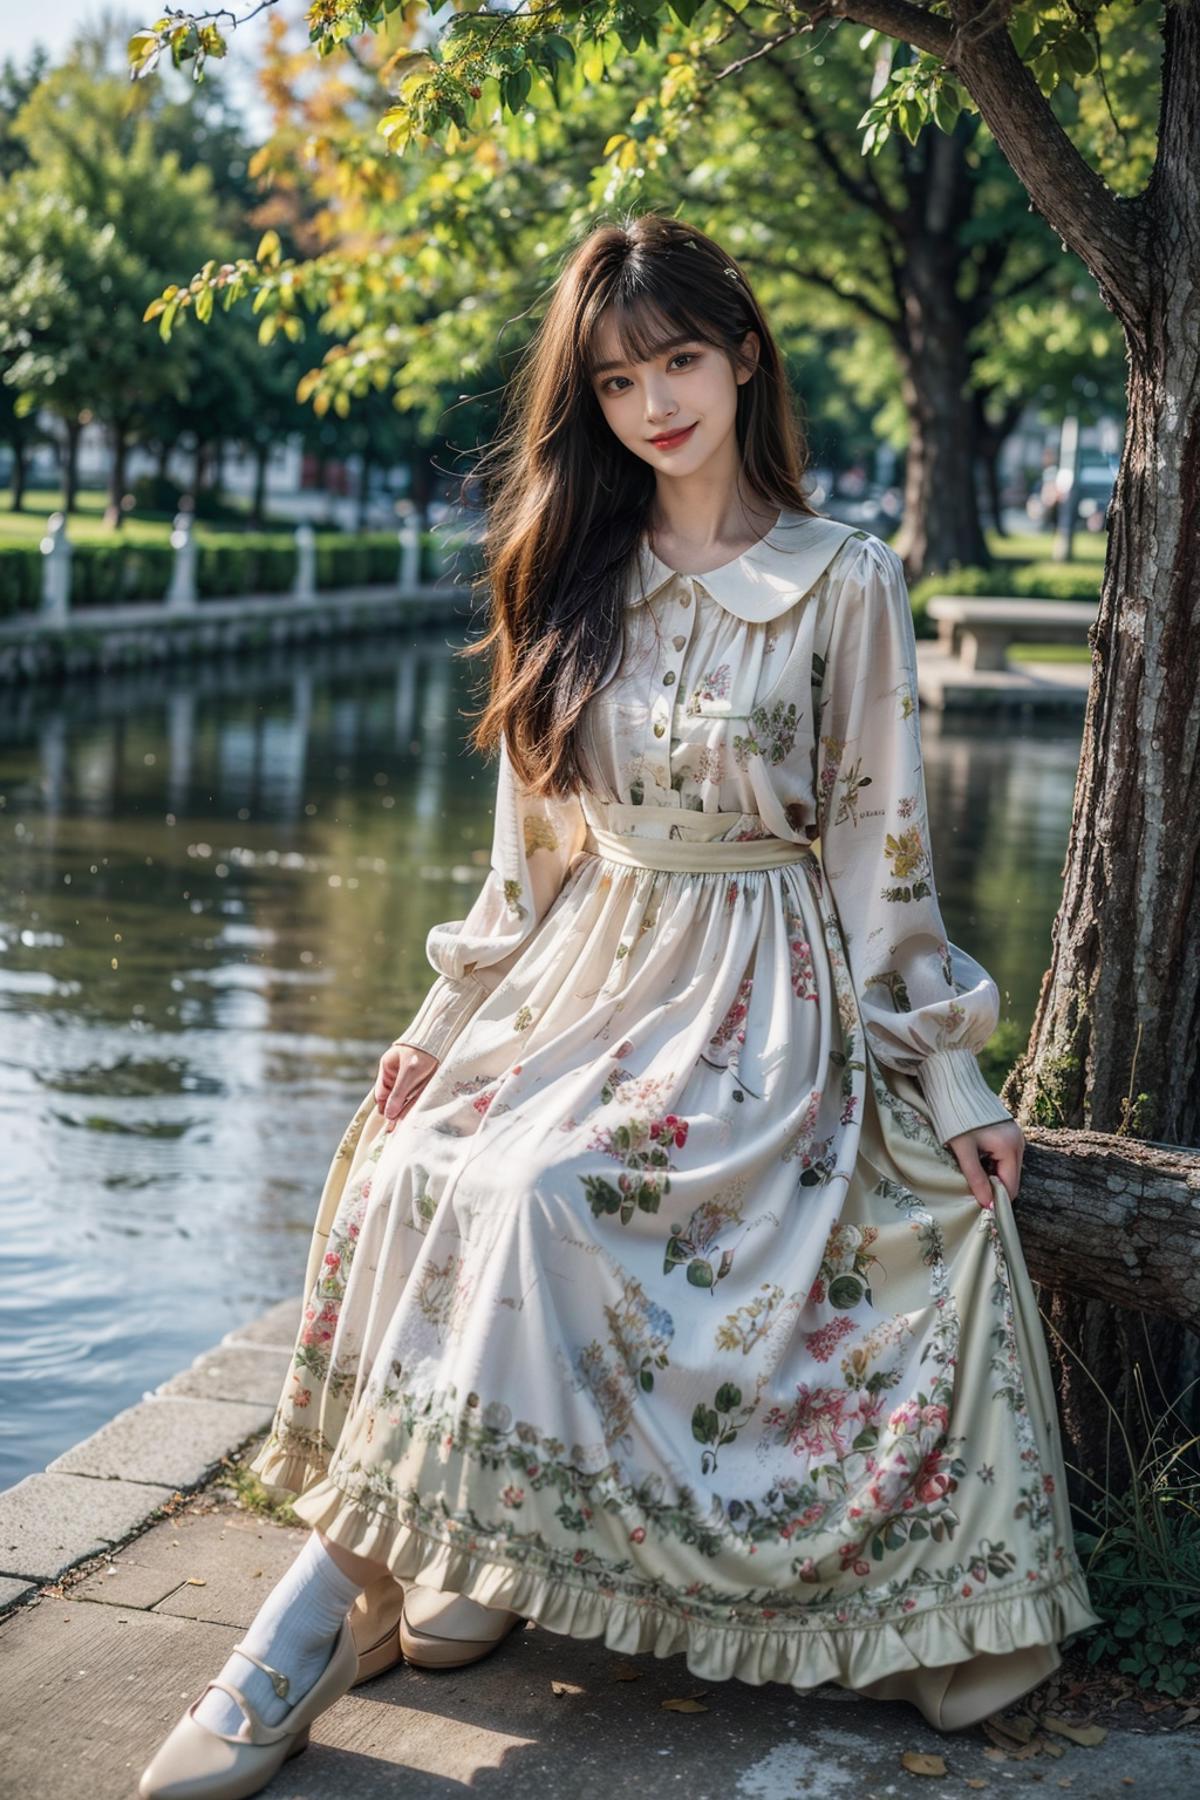 [Realistic] Beautiful dress collection | 一些好看的裙子 image by cyberAngel_